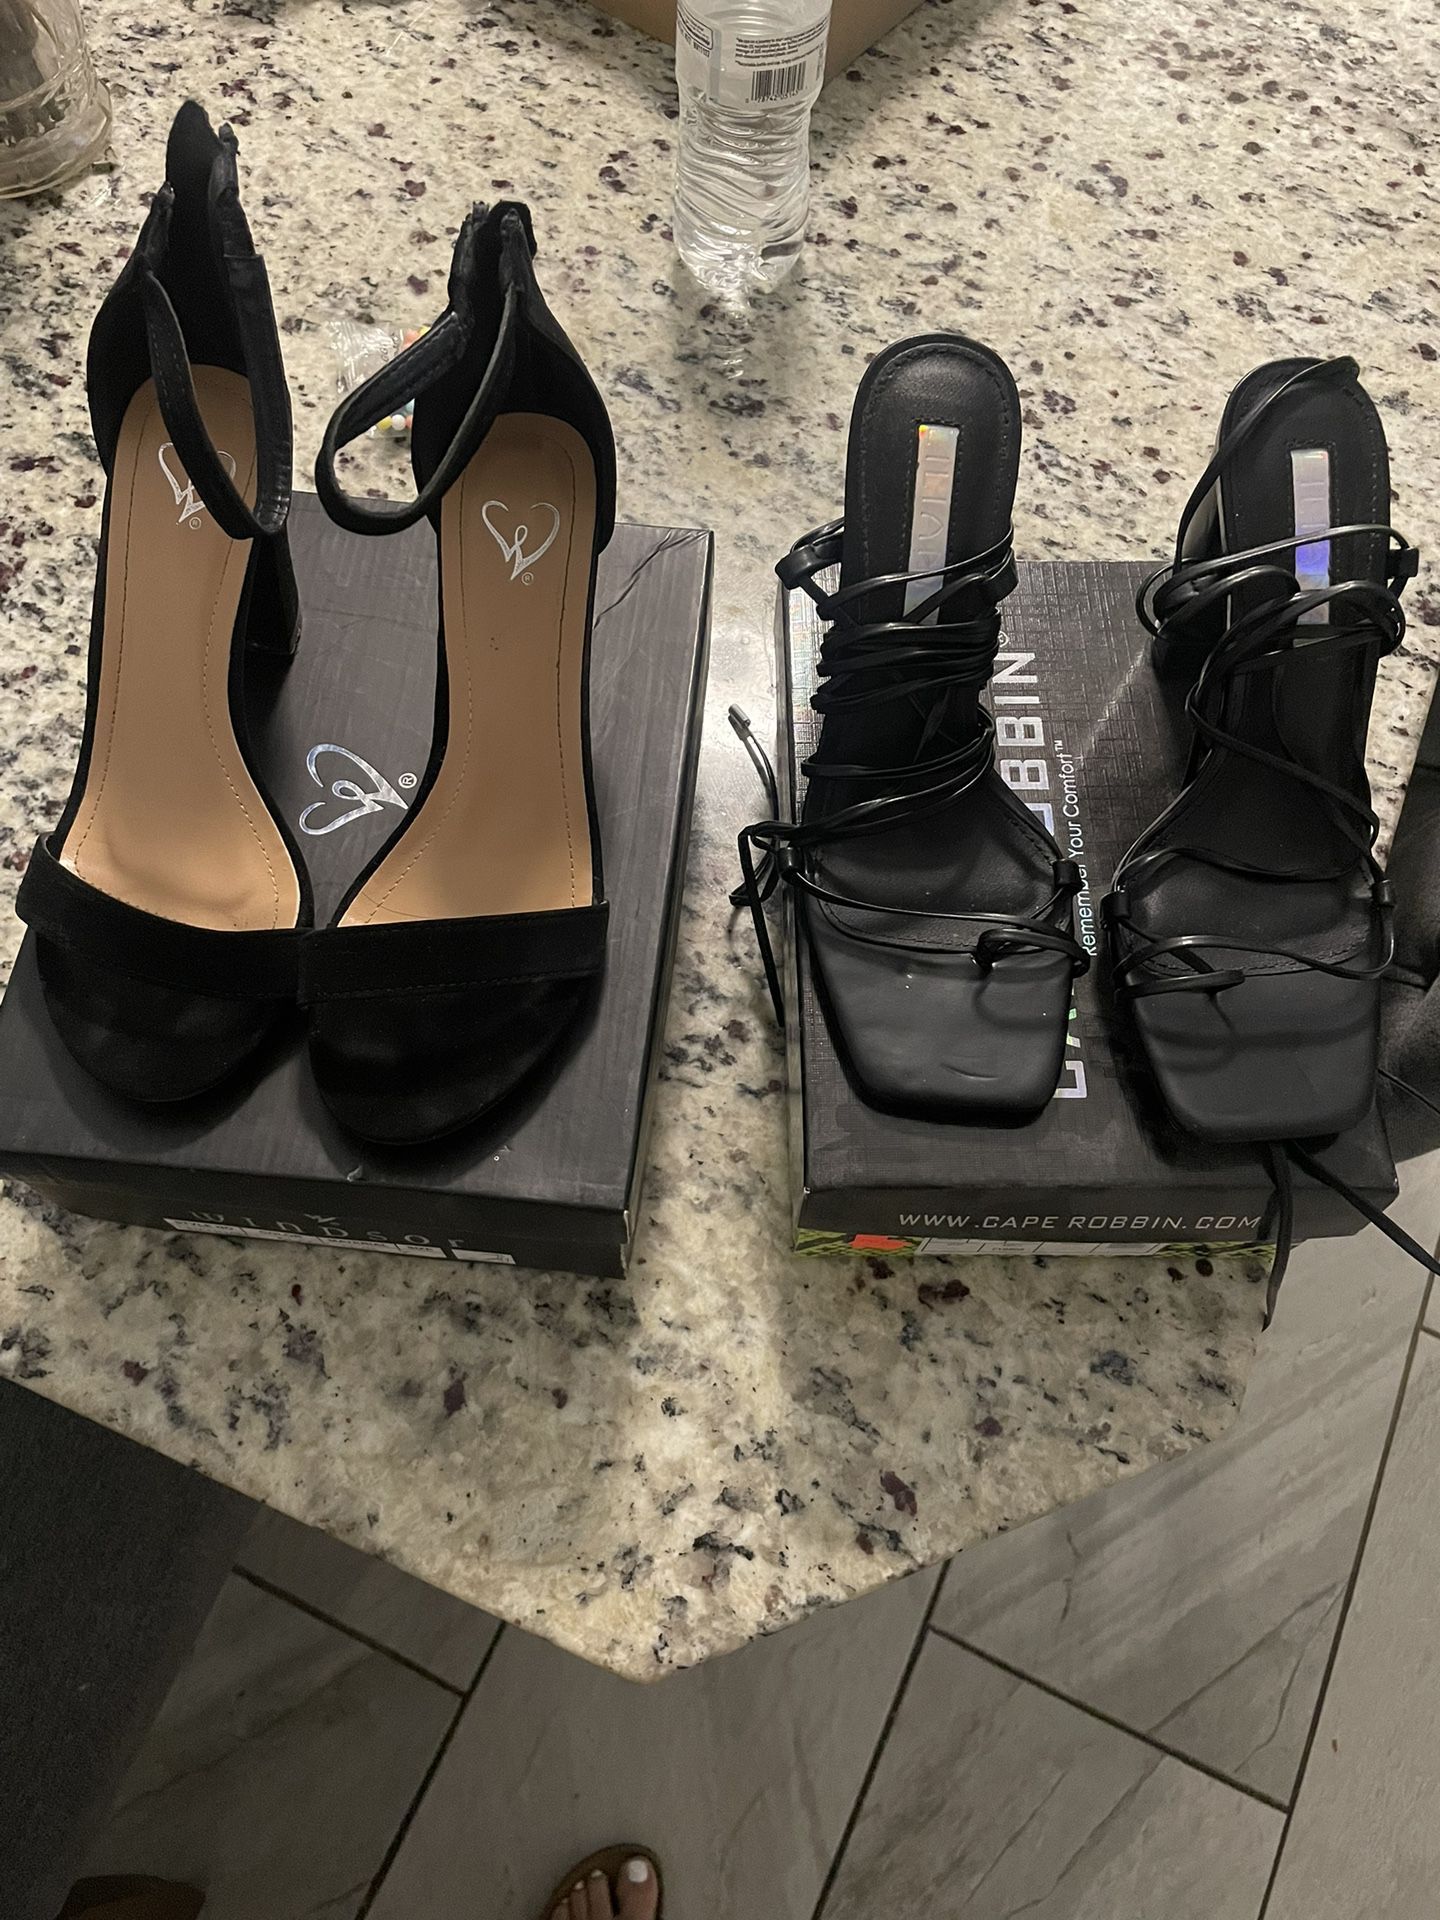 Black heels 